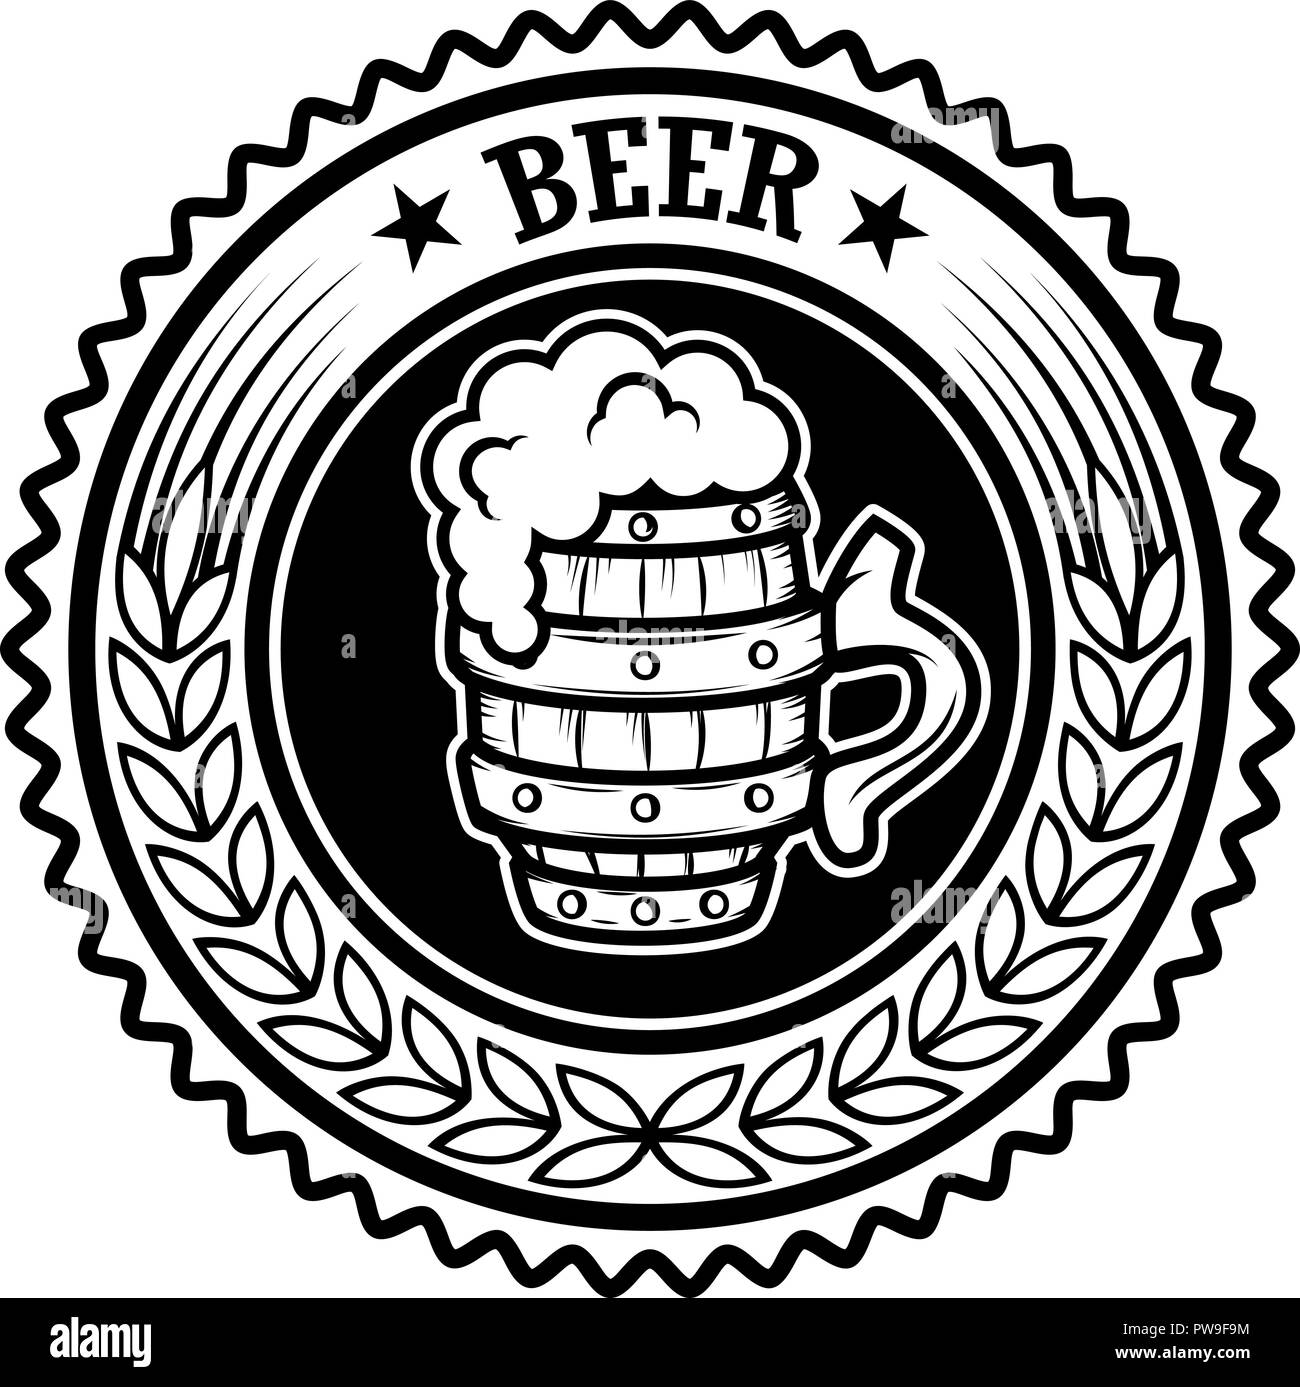 Vintage beer Label. Designelemente für Logo, Label, Emblem, Zeichen, Menü. Vector Illustration Stock Vektor